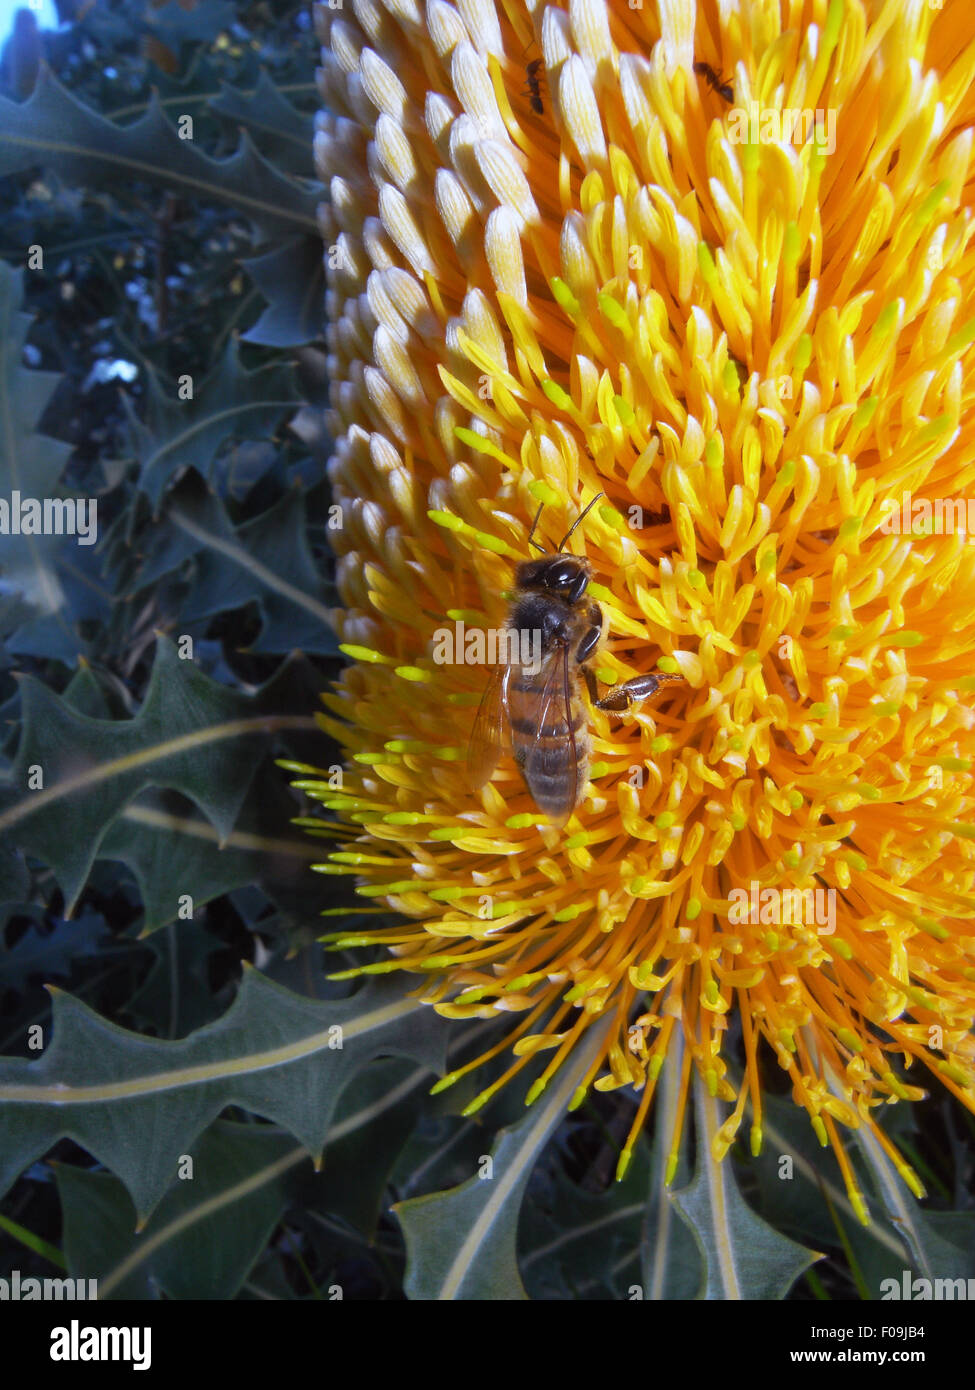 European honeybee (Apis mellifera) pollinating flower of Banksia ashbyi, King's Park, Perth, Western Australia Stock Photo